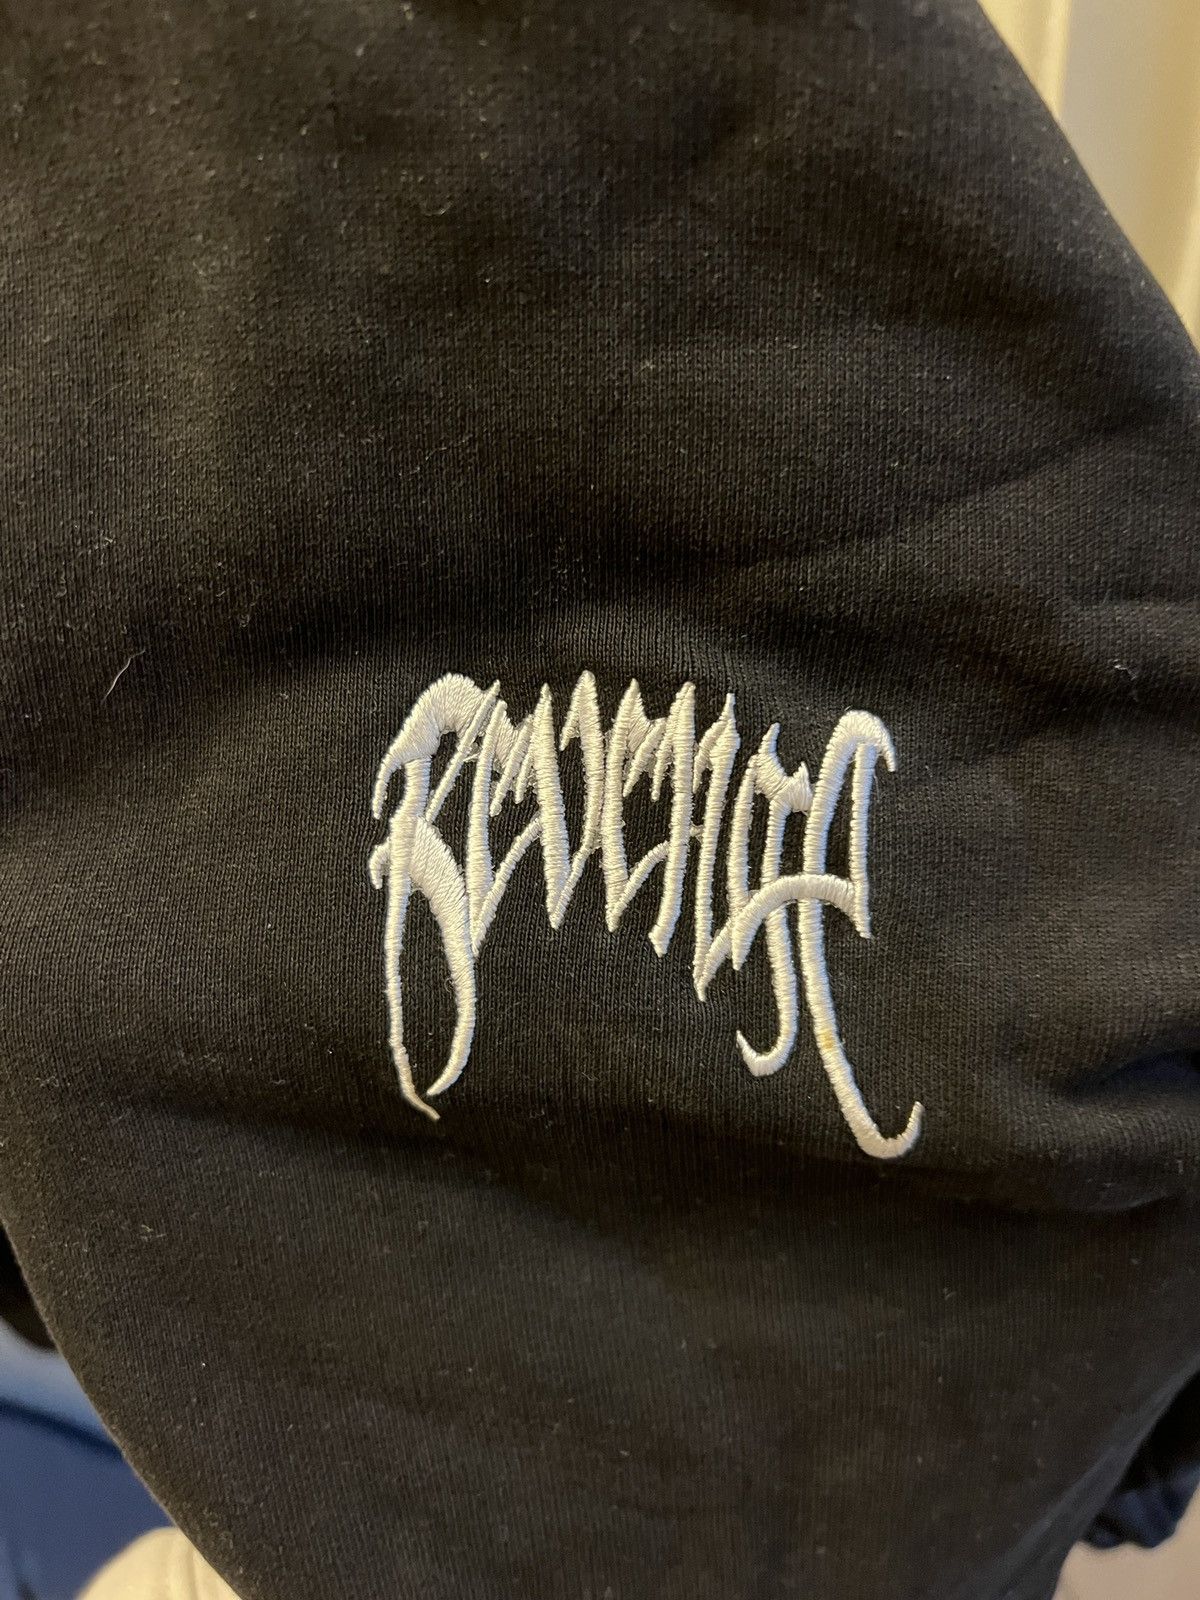 Revenge Revenge Zip up hoodie Embroidery on hood Size US L / EU 52-54 / 3 - 3 Thumbnail